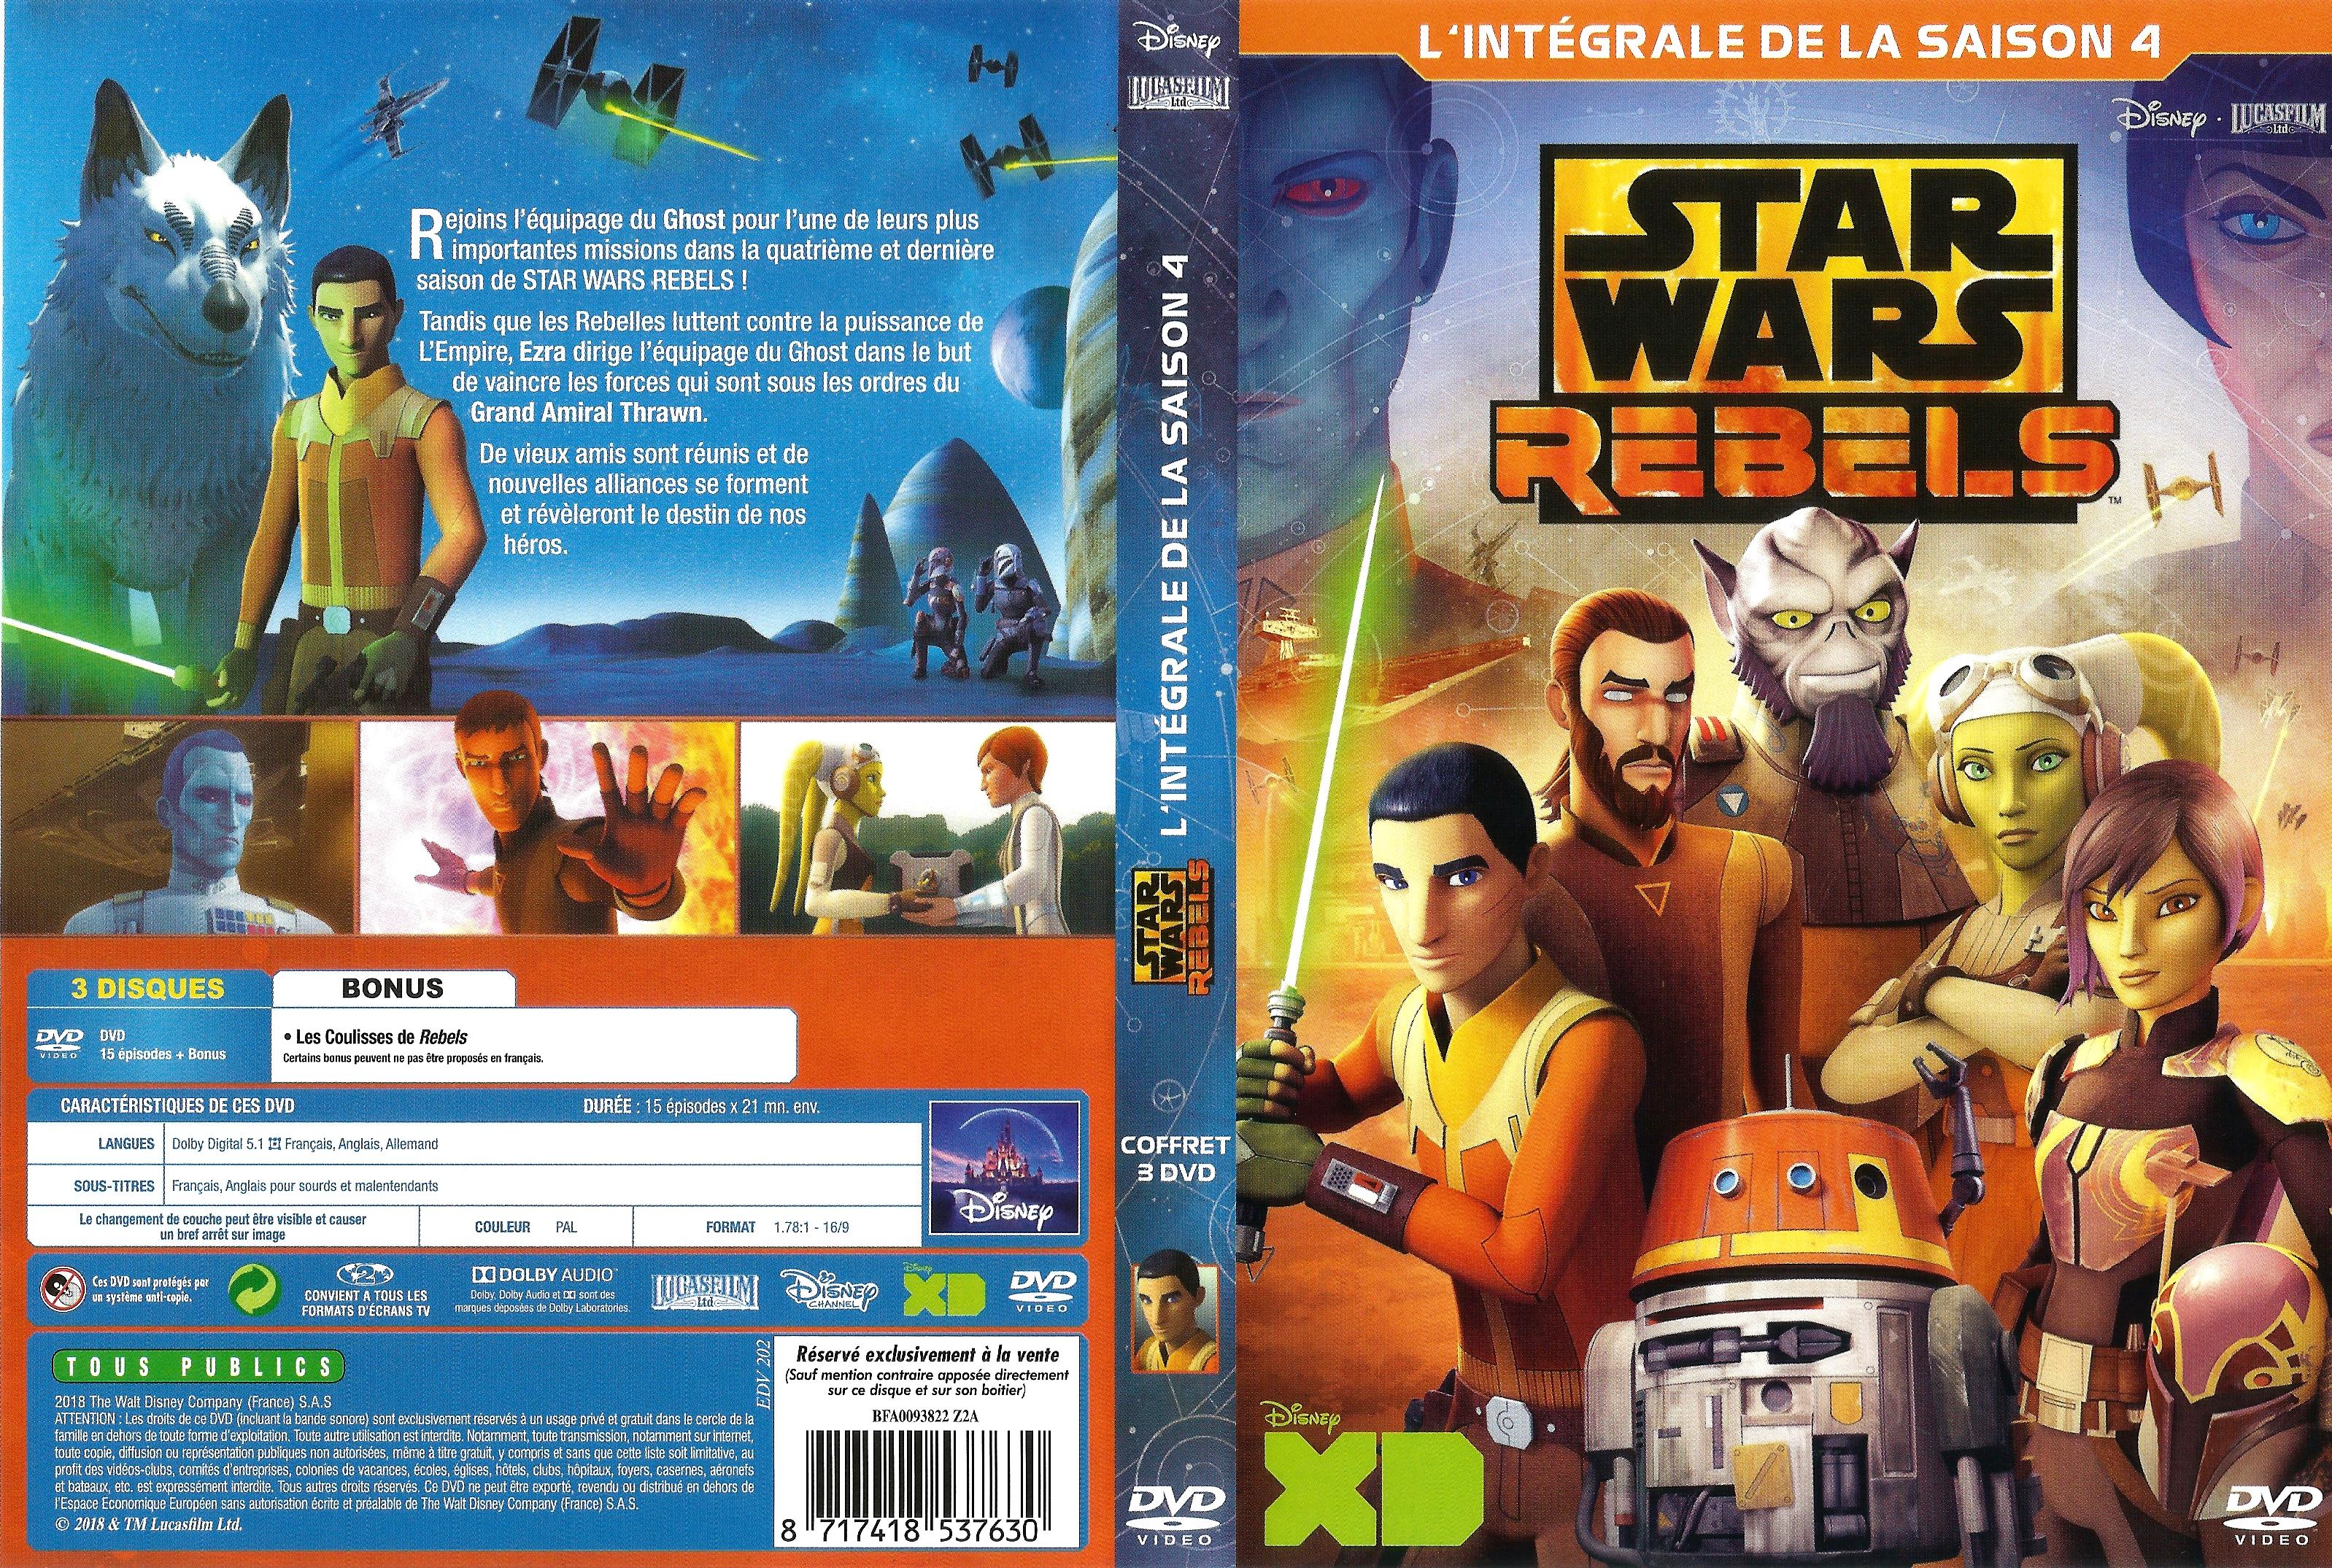 Jaquette DVD Star Wars Rebels saison 4